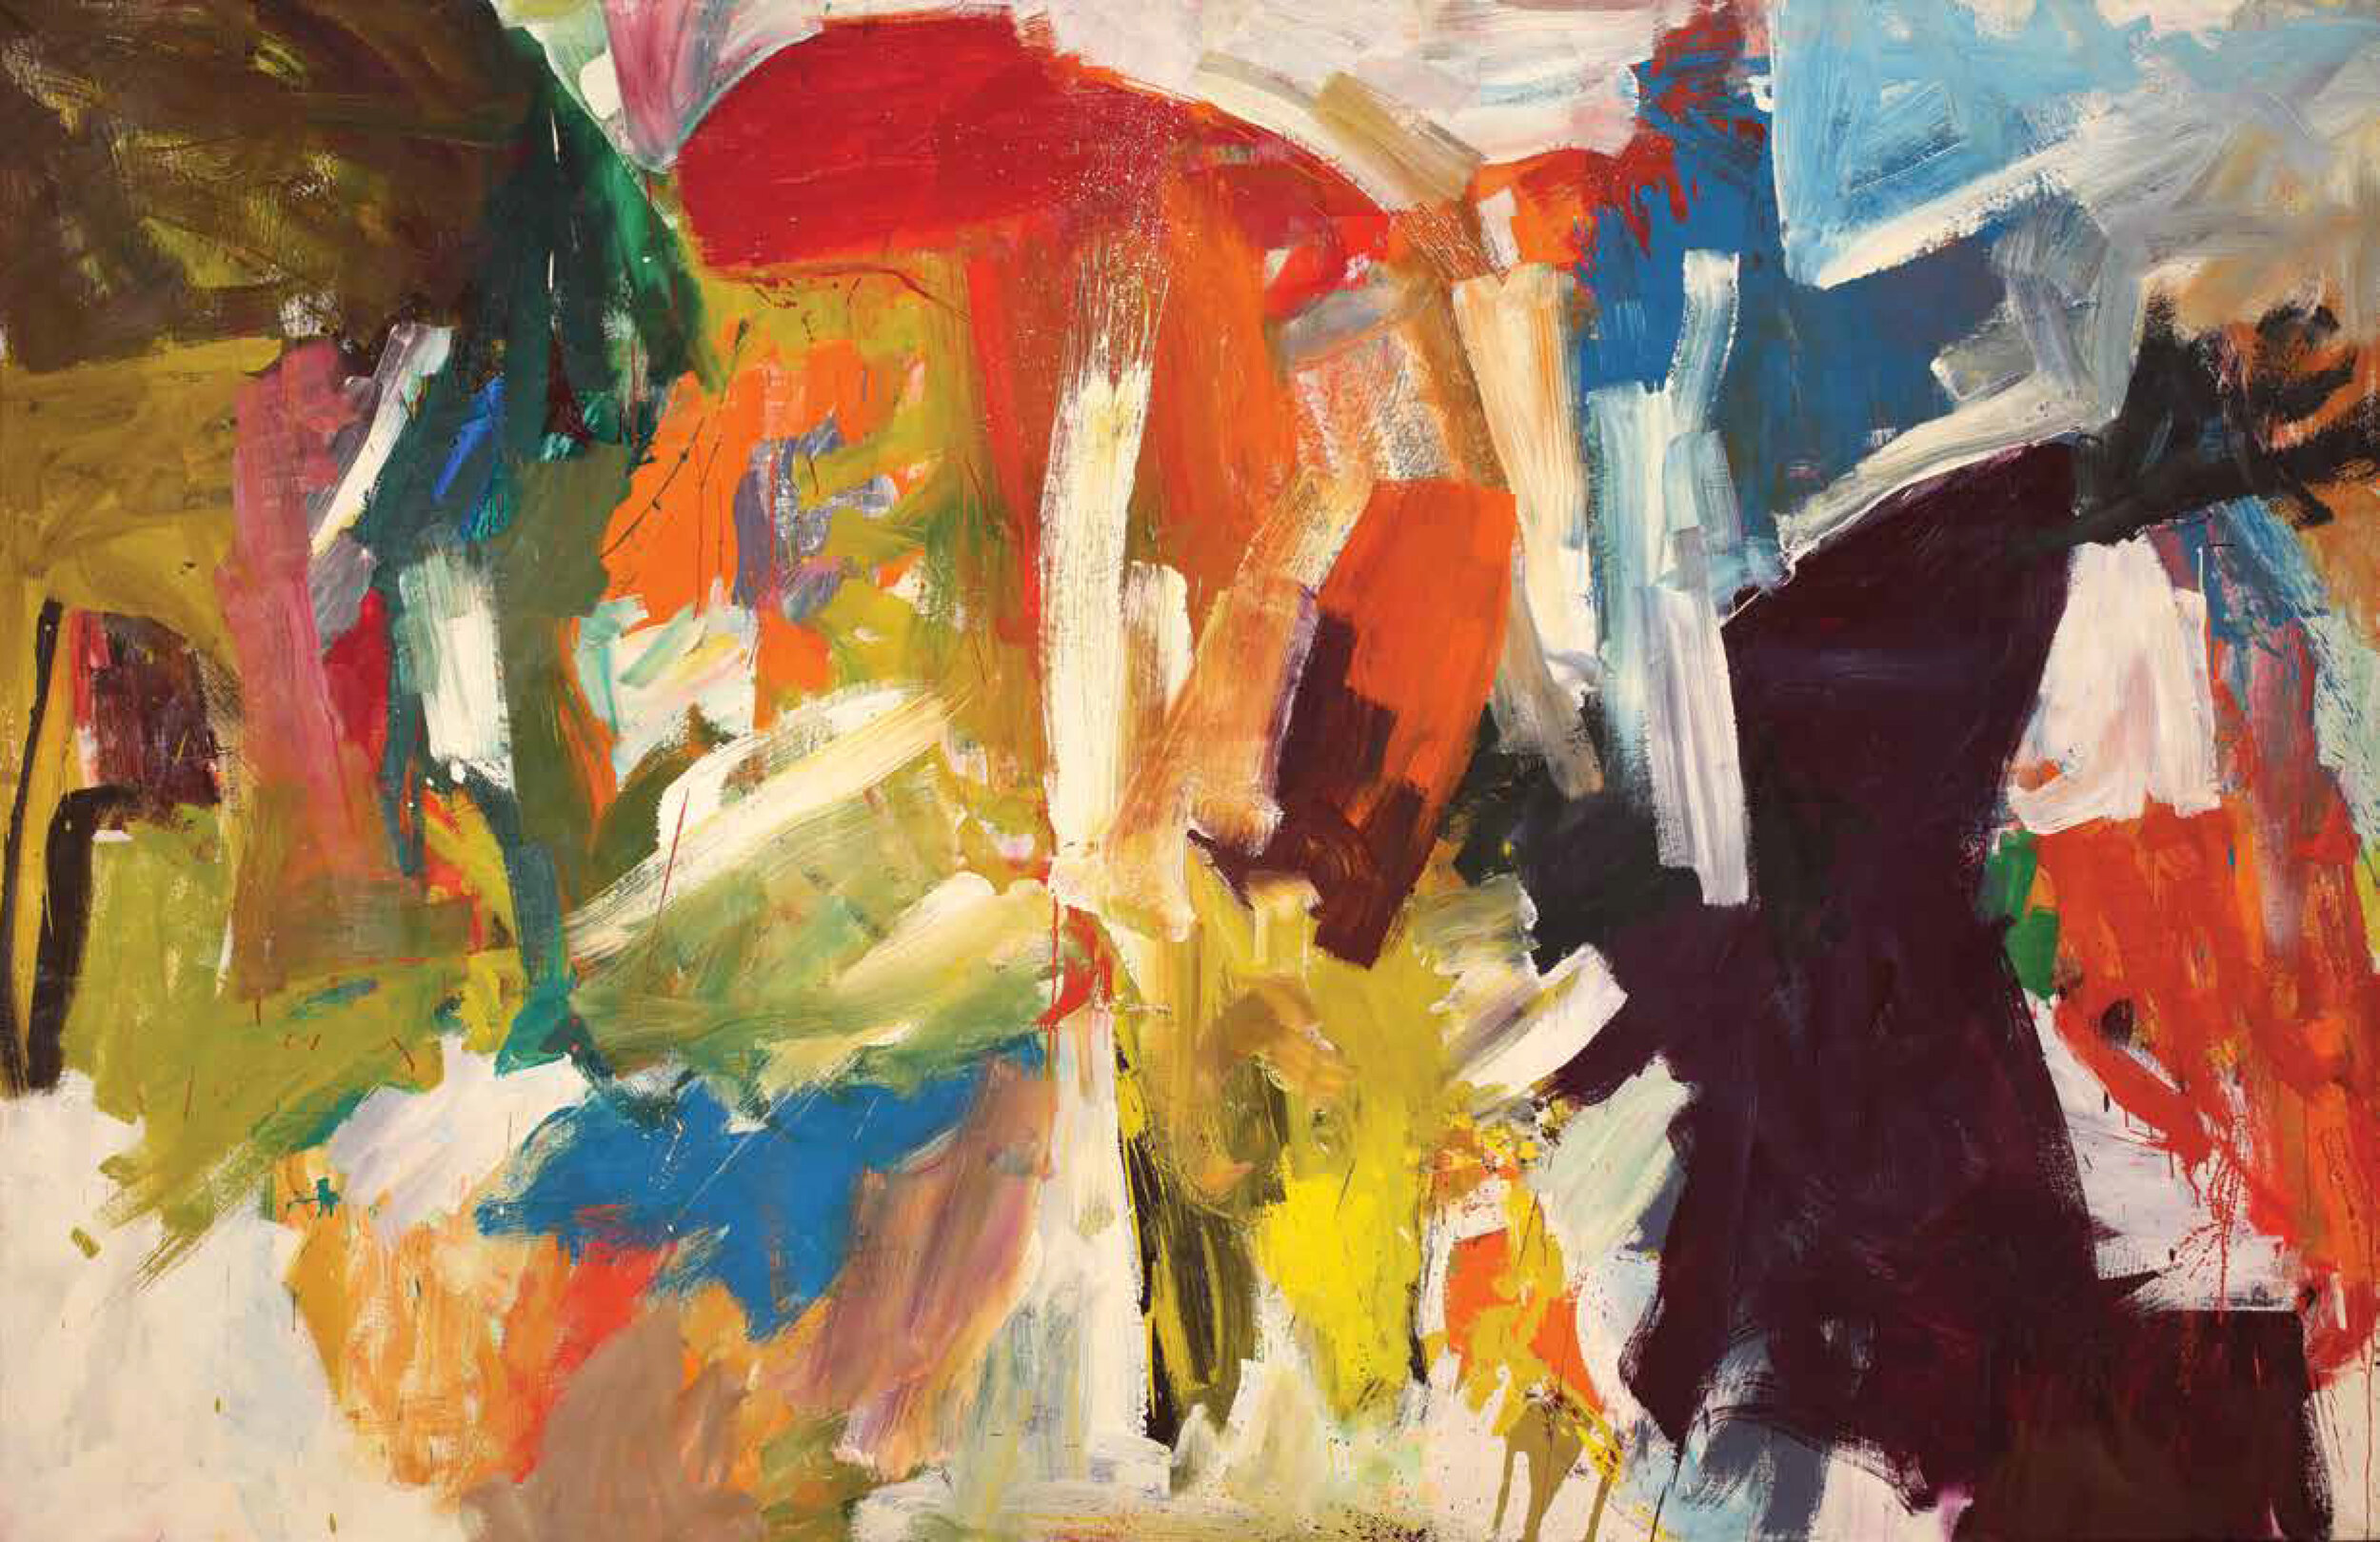  John Little Yaphank 1964 Oil on canvas 75 x 115 inches